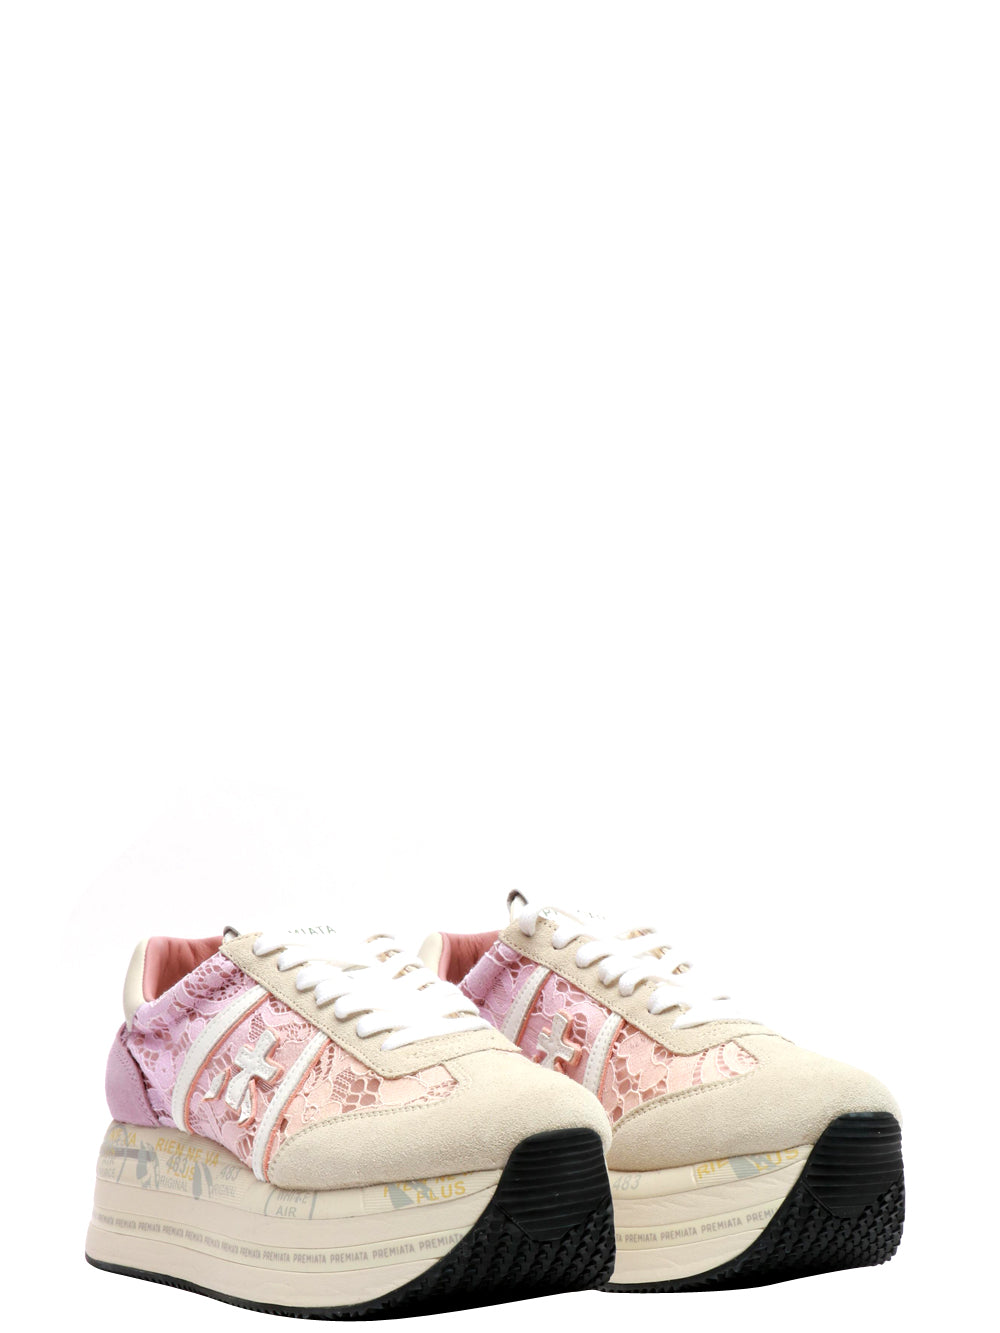 PREMIATA Scarpe Sneakers Beth in Macramé Rosa Sfumata Rosa